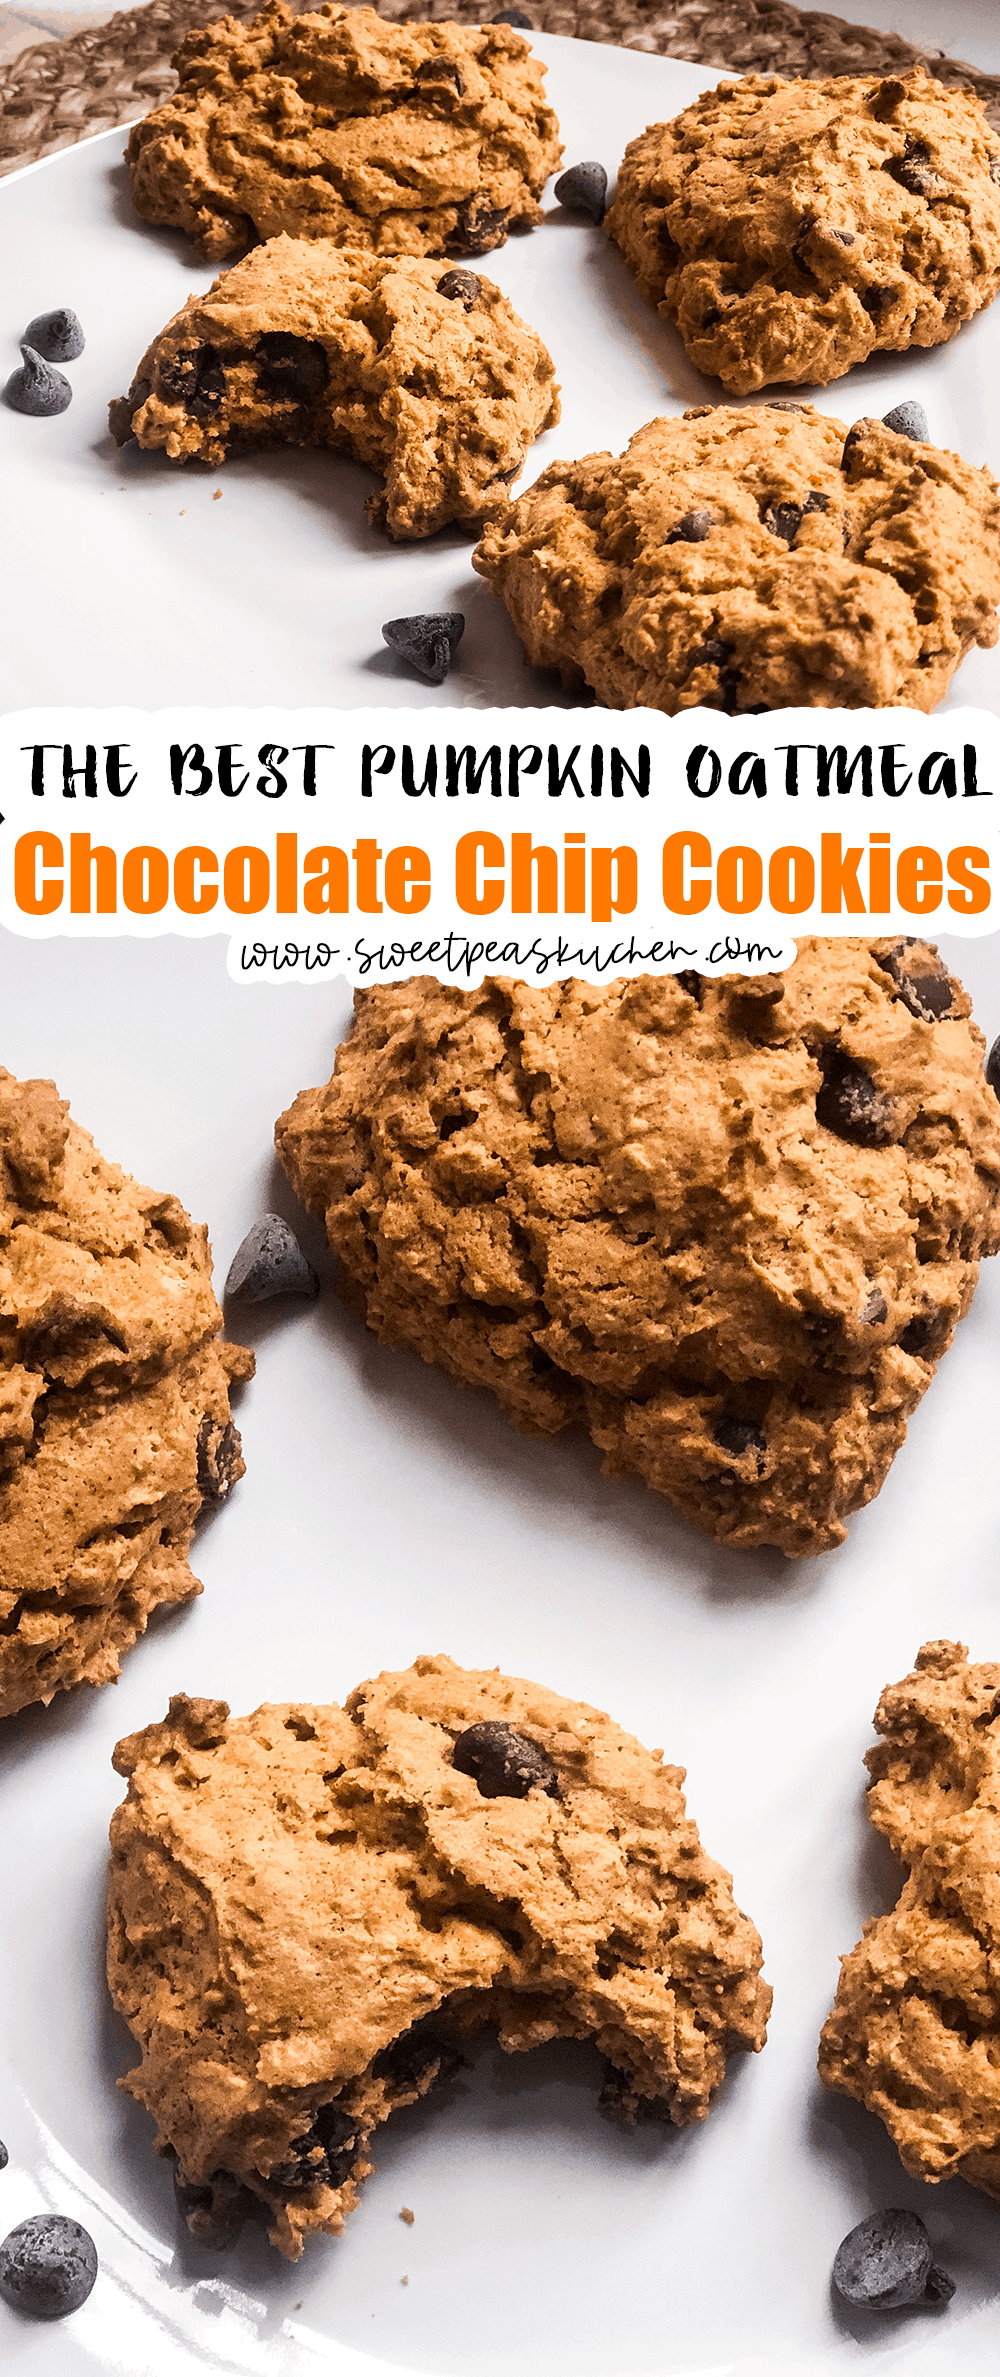 The BEST Pumpkin Oatmeal Chocolate Chip Cookies